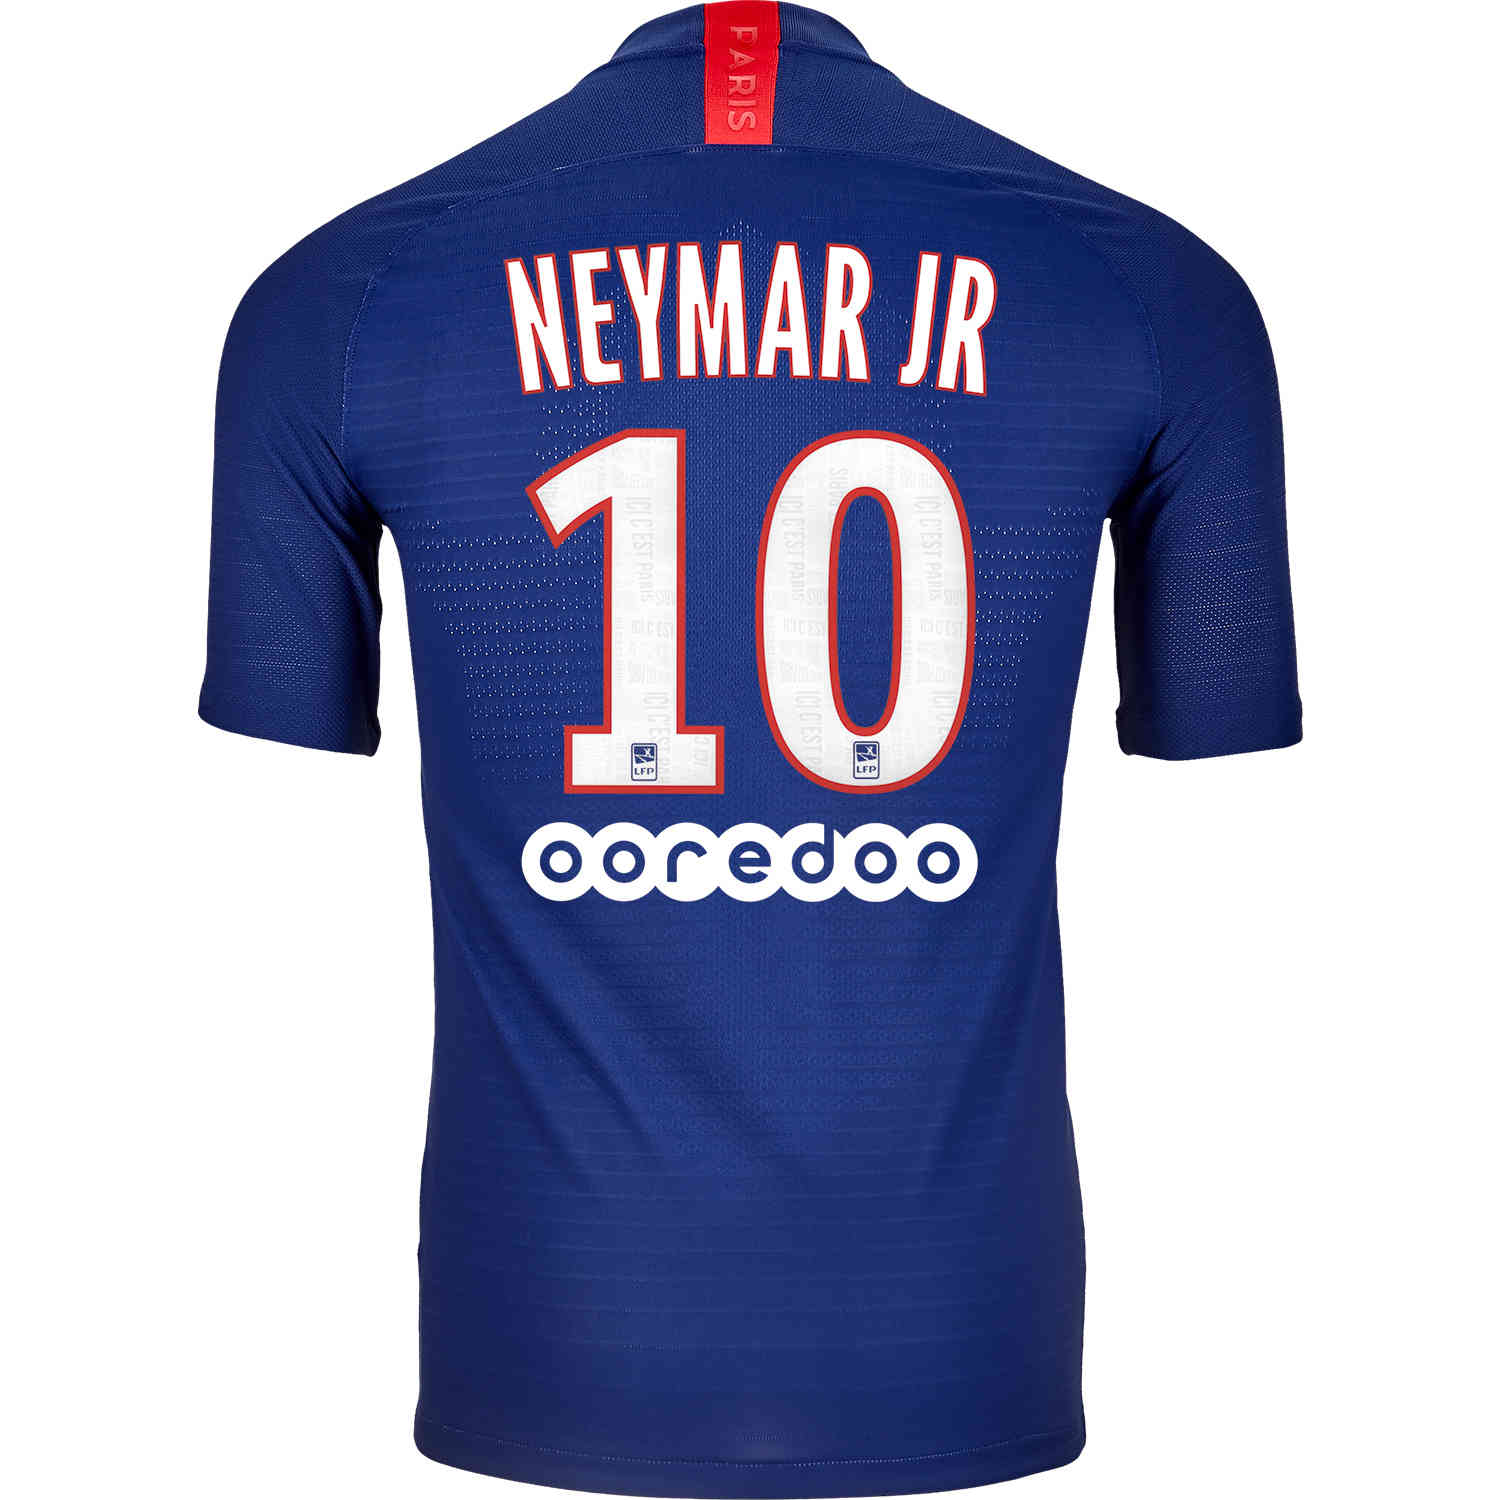 2019/20 Nike Neymar Jr PSG Home Match Jersey - SoccerPro